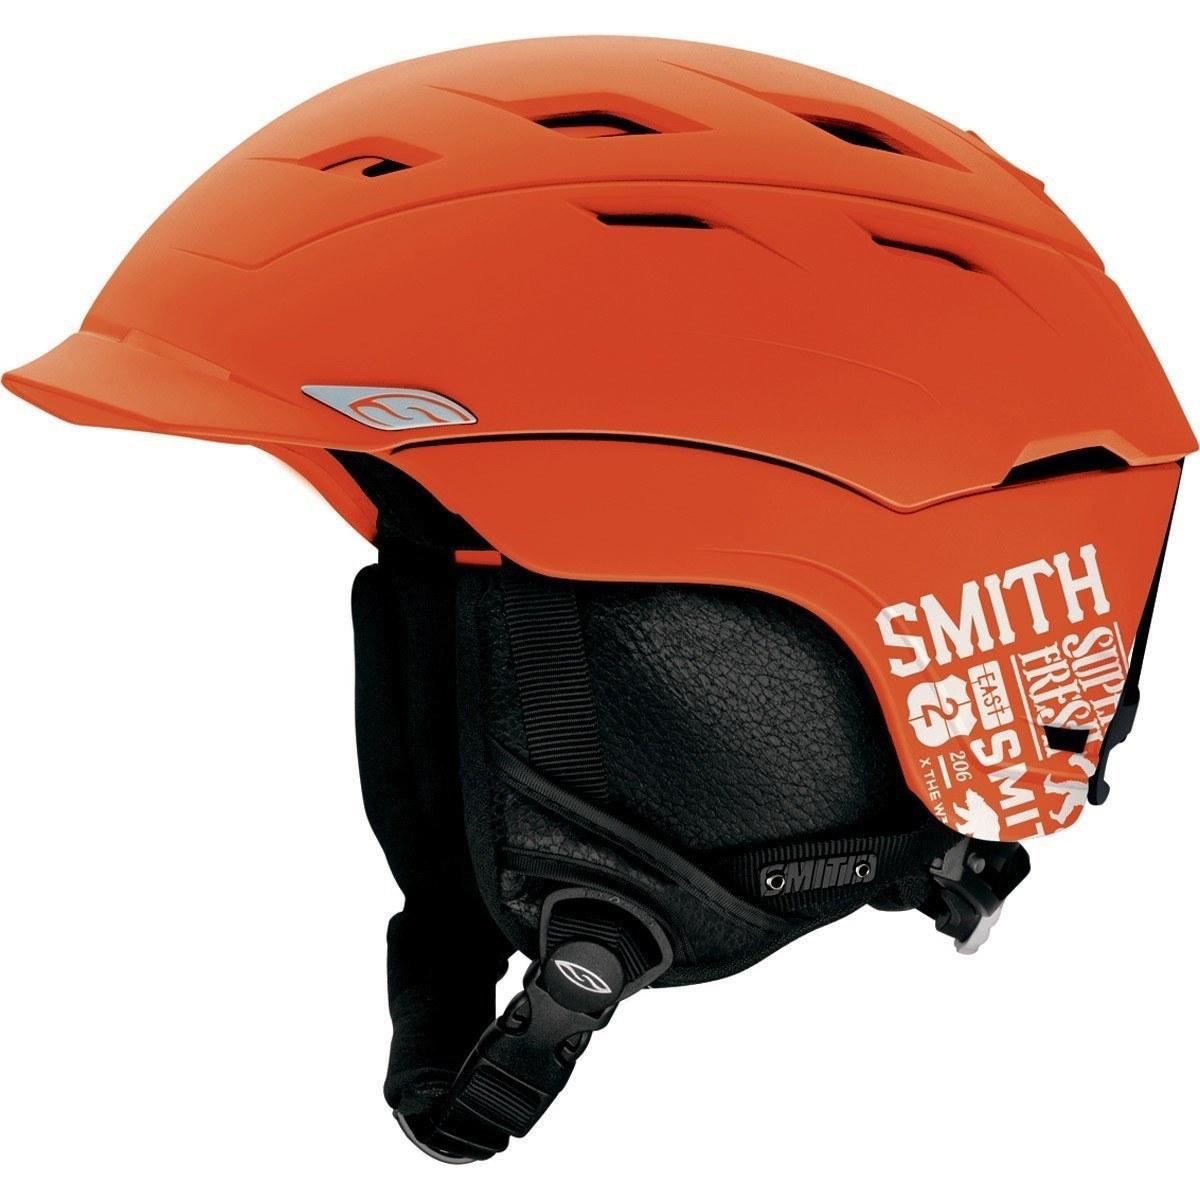 Smith Optics Variance Helmet